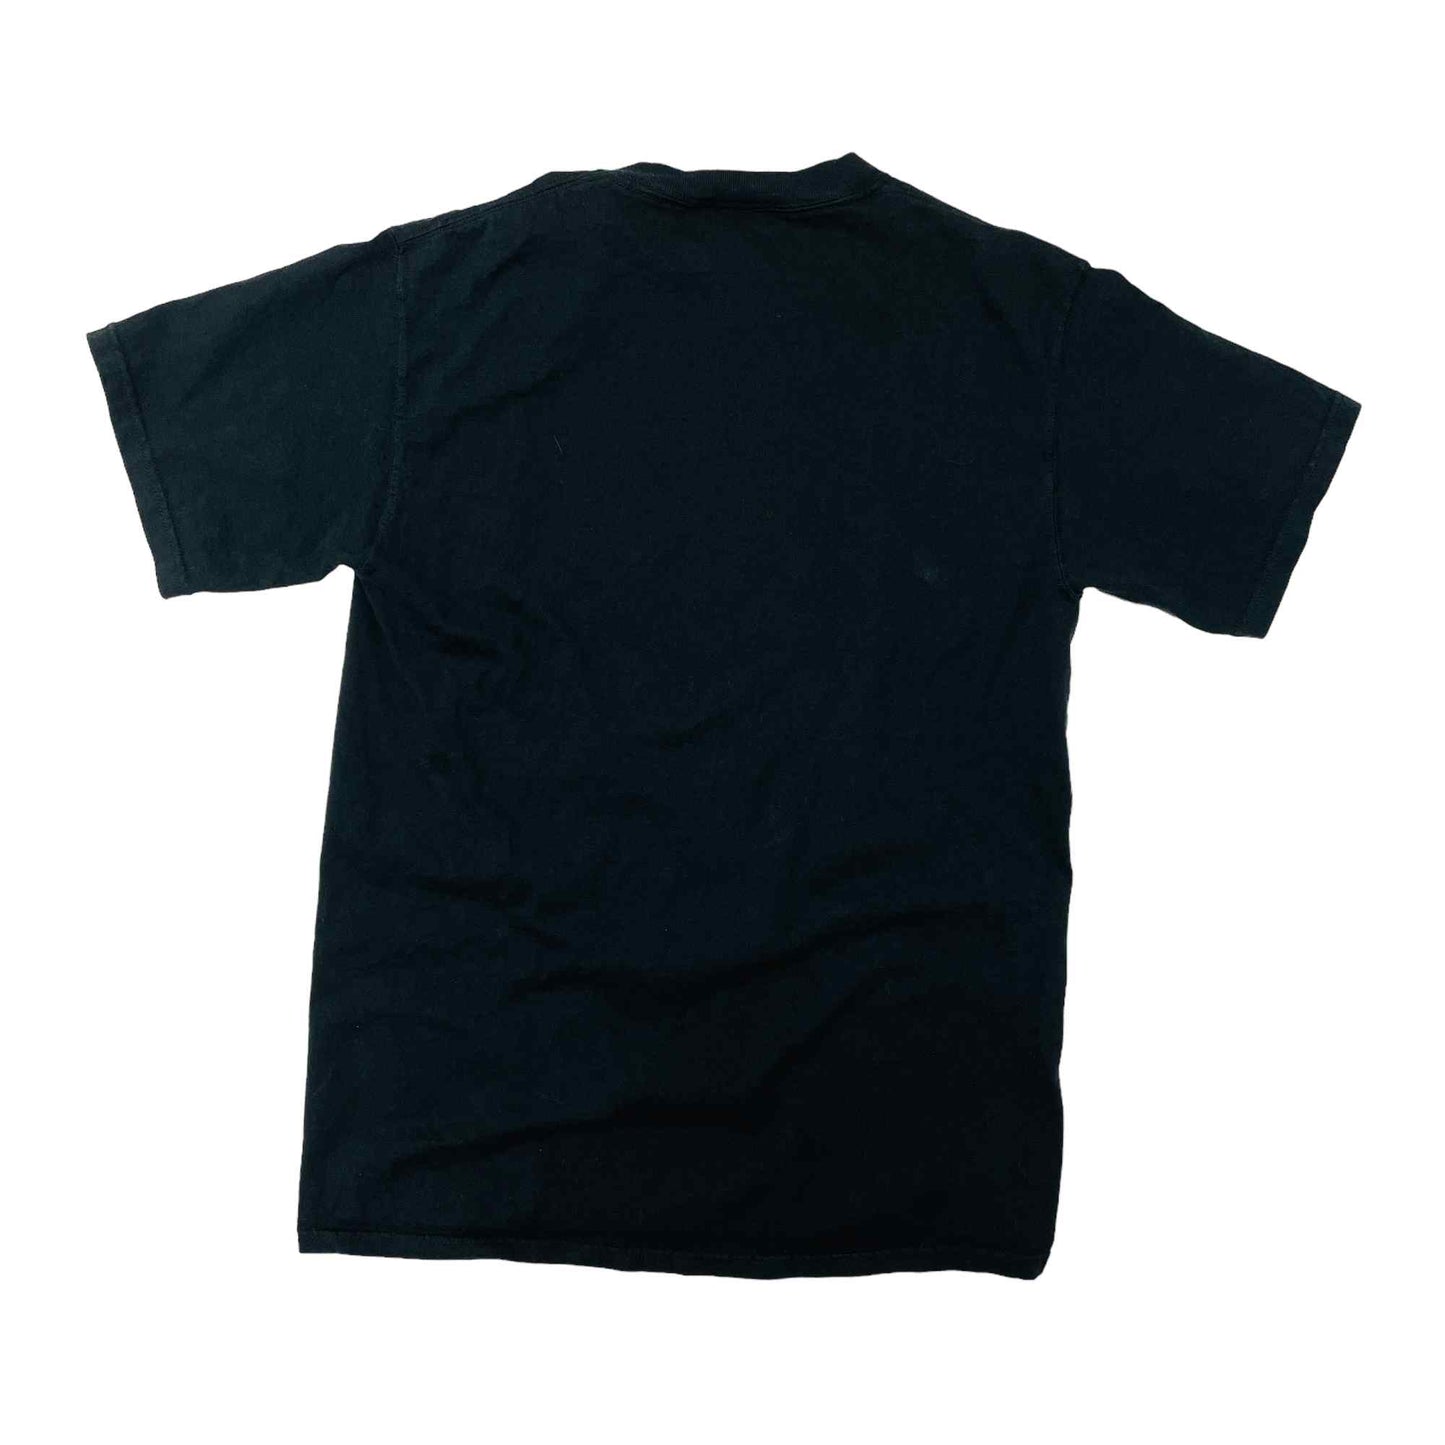 MLB Chicago White Sox Women's Short Sleeve V-Neck Fashion T-Shirt - M